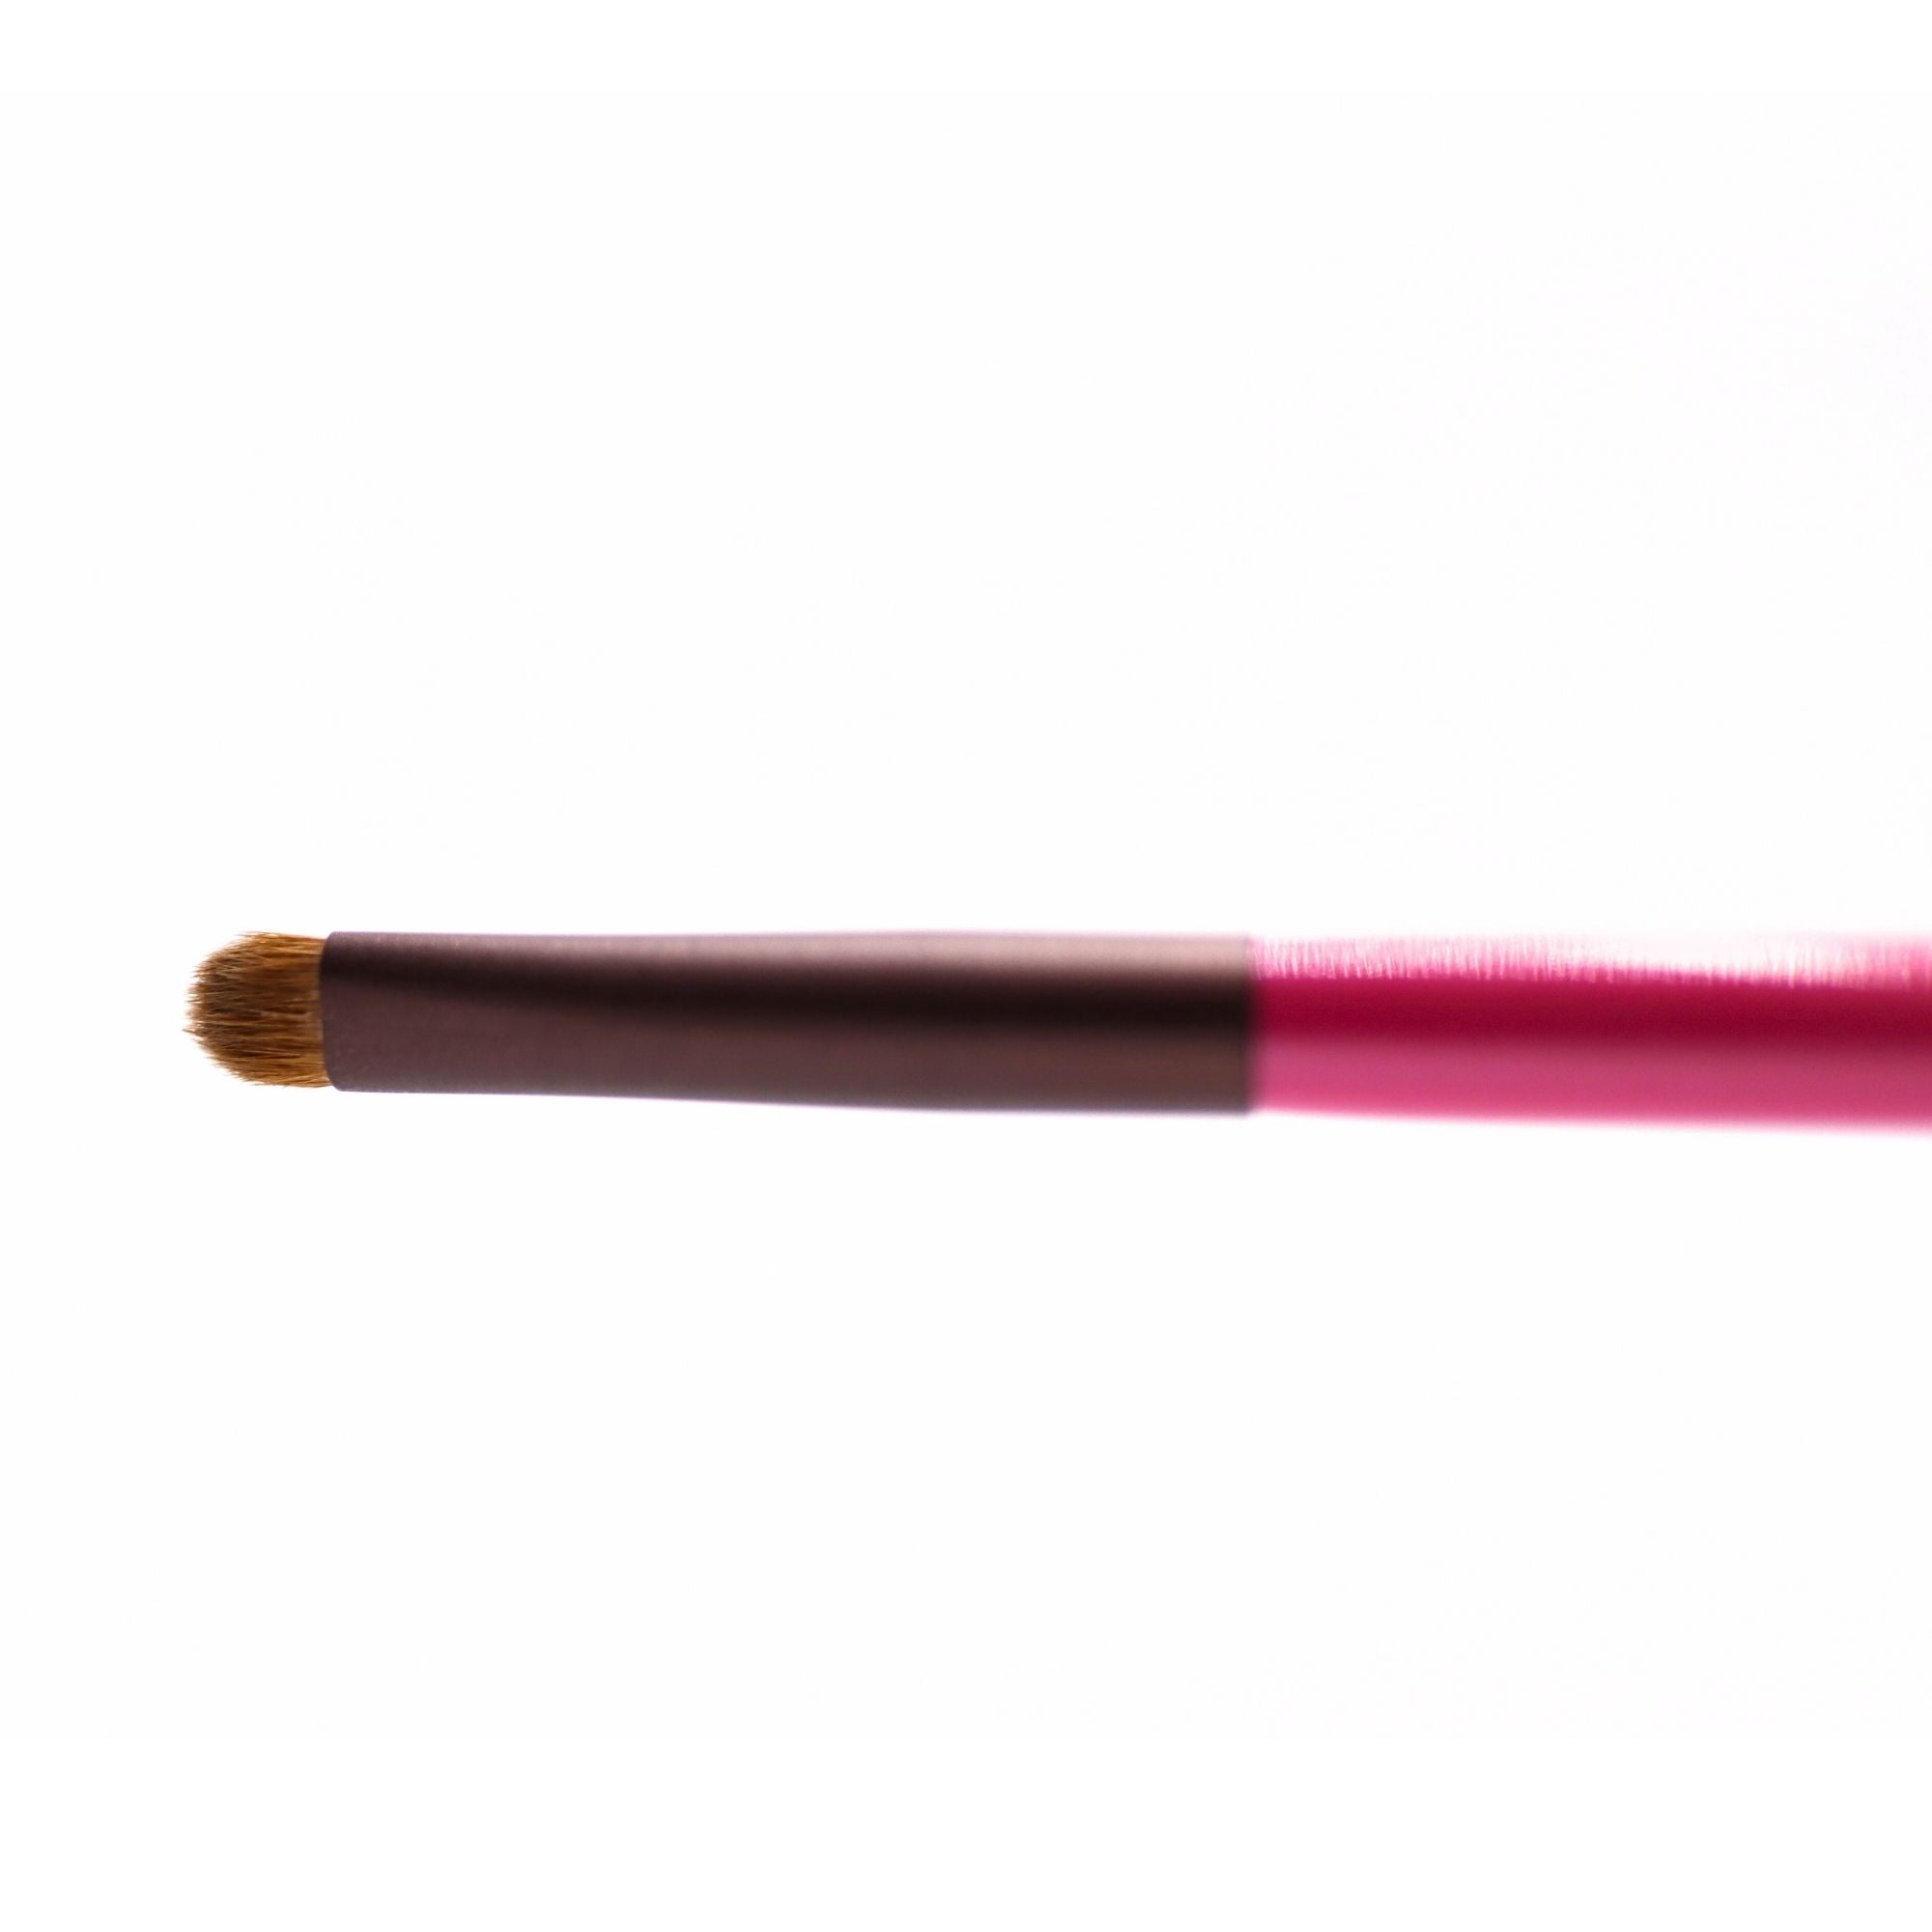 Tauhaus Shadow-Liner Brush, Cherry Series (S-EL07N) - Fude Beauty, Japanese Makeup Brushes